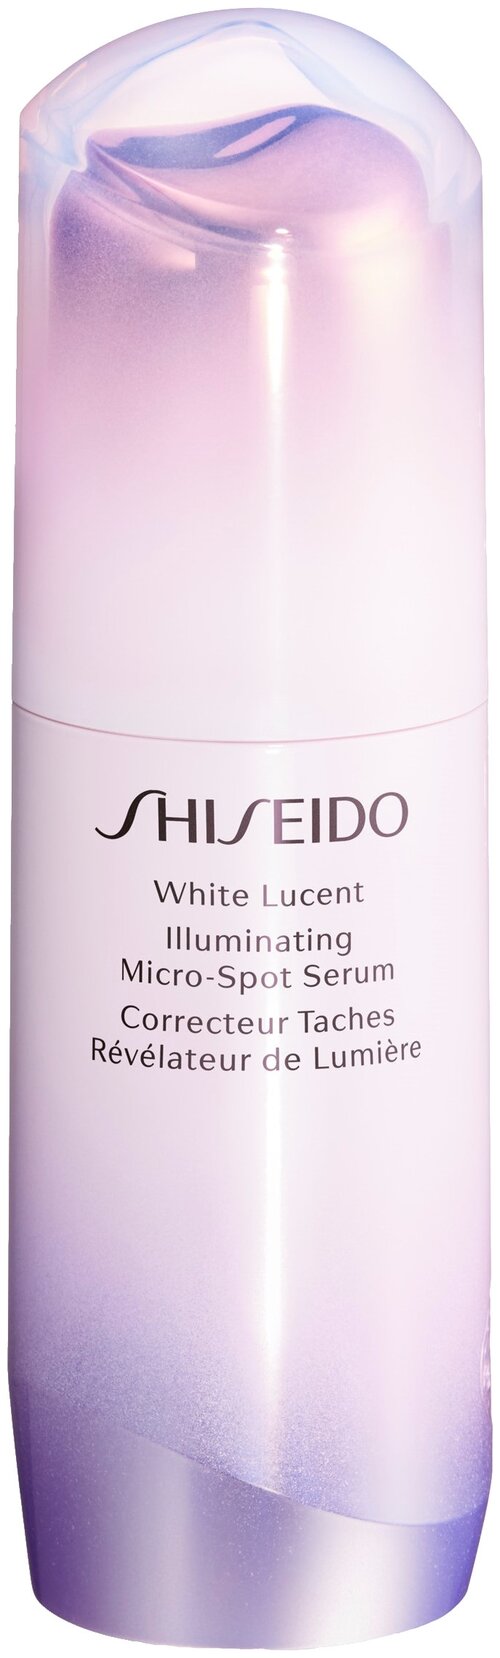 Shiseido White Lucent Illuminating Micro-Spot Serum Осветляющая сыворотка против пигментных пятен, 30 мл